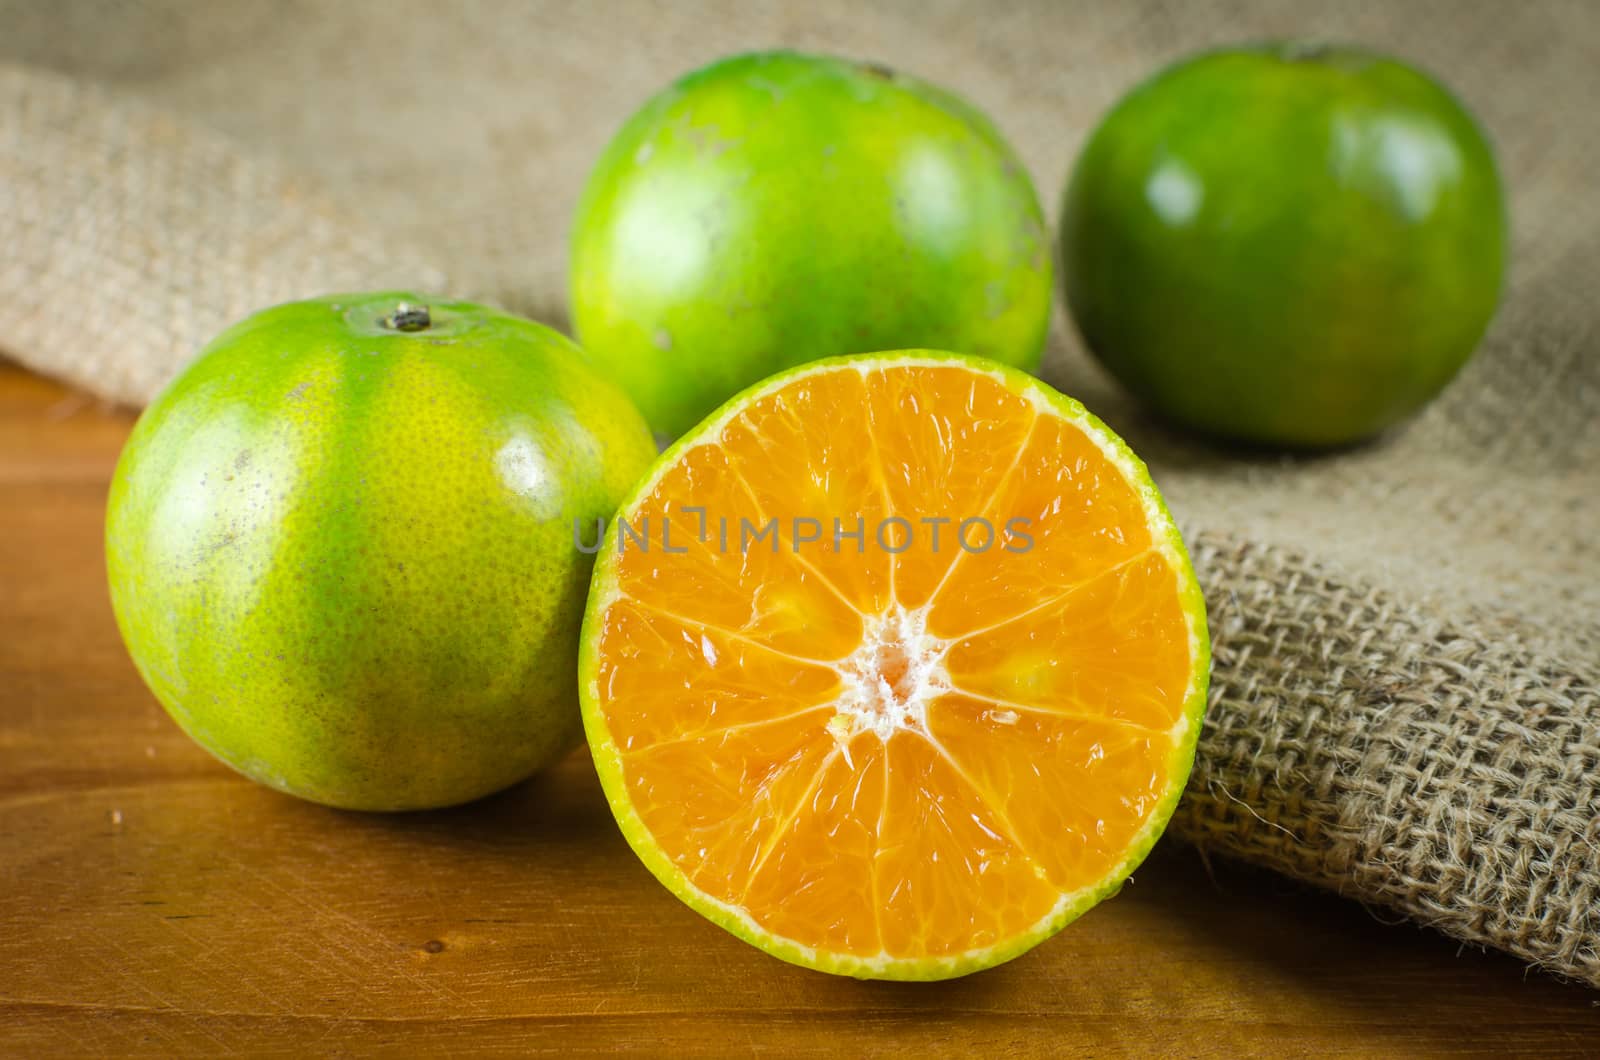 mandarin orange,Tangerines, sweet green thai orange ripe fruit for a healthy feed